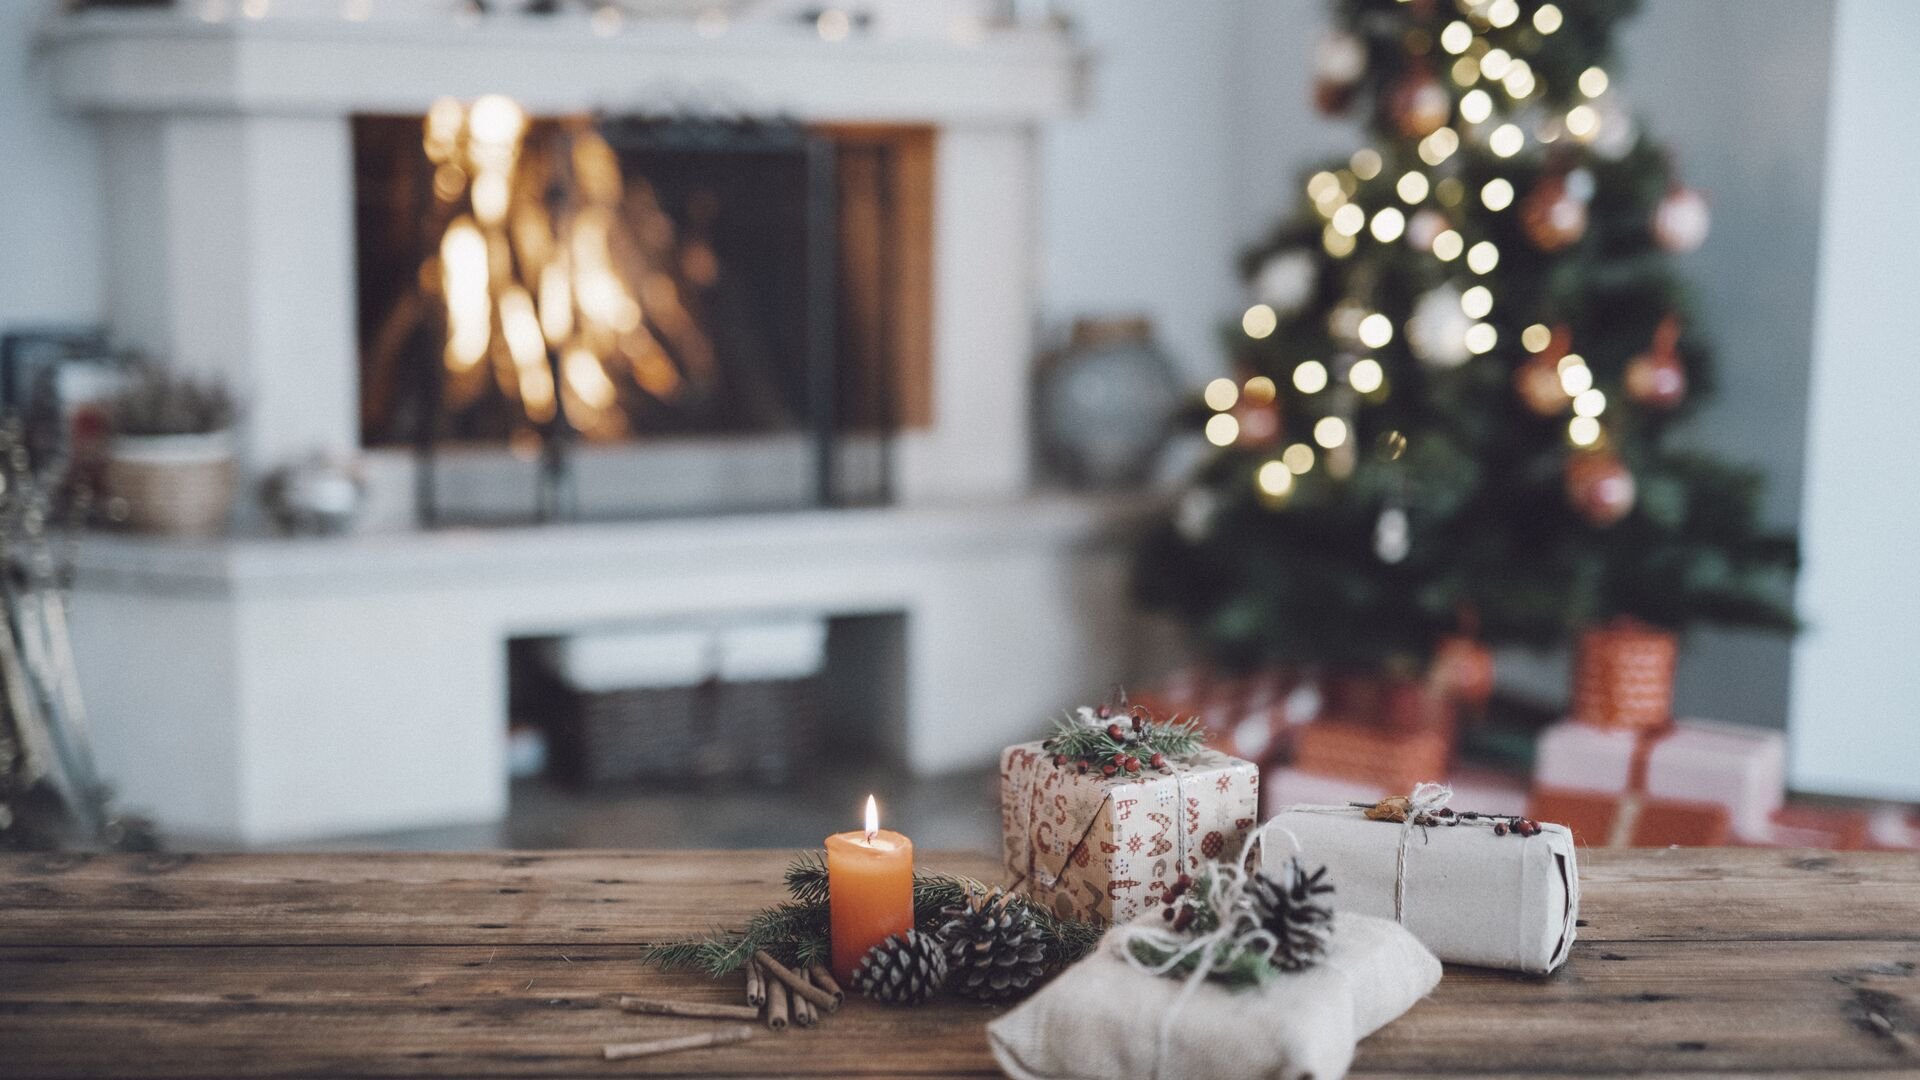 Christmas setting with fireplace, Christmas tree and gifts